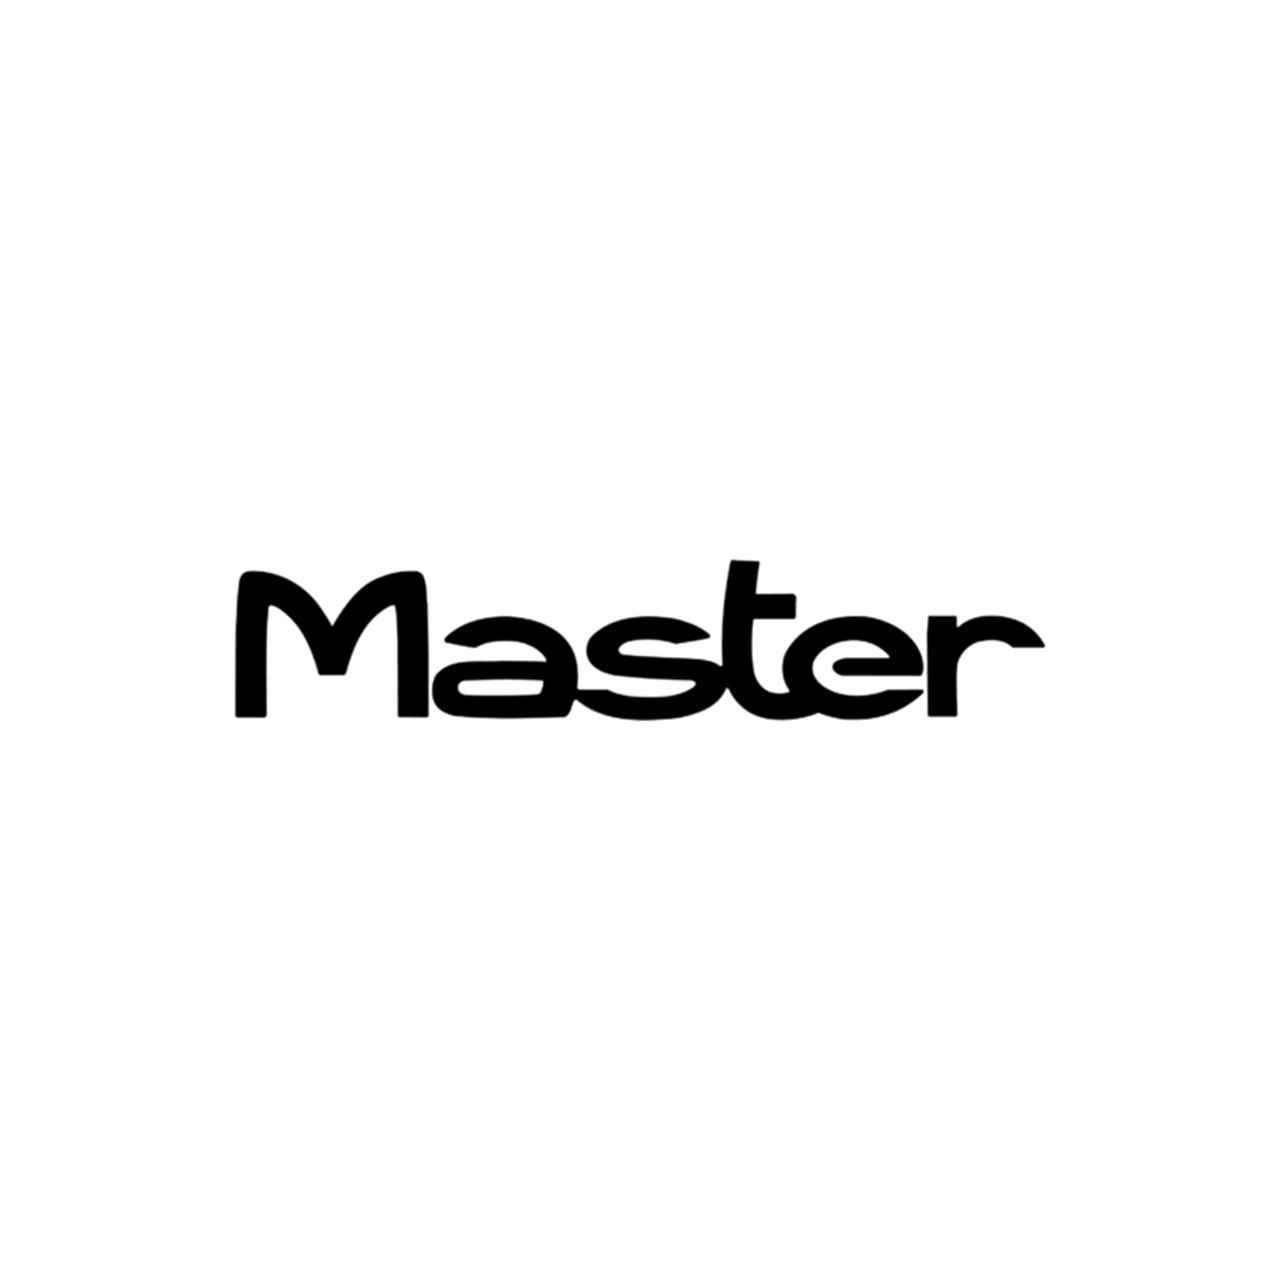 MASTER - 